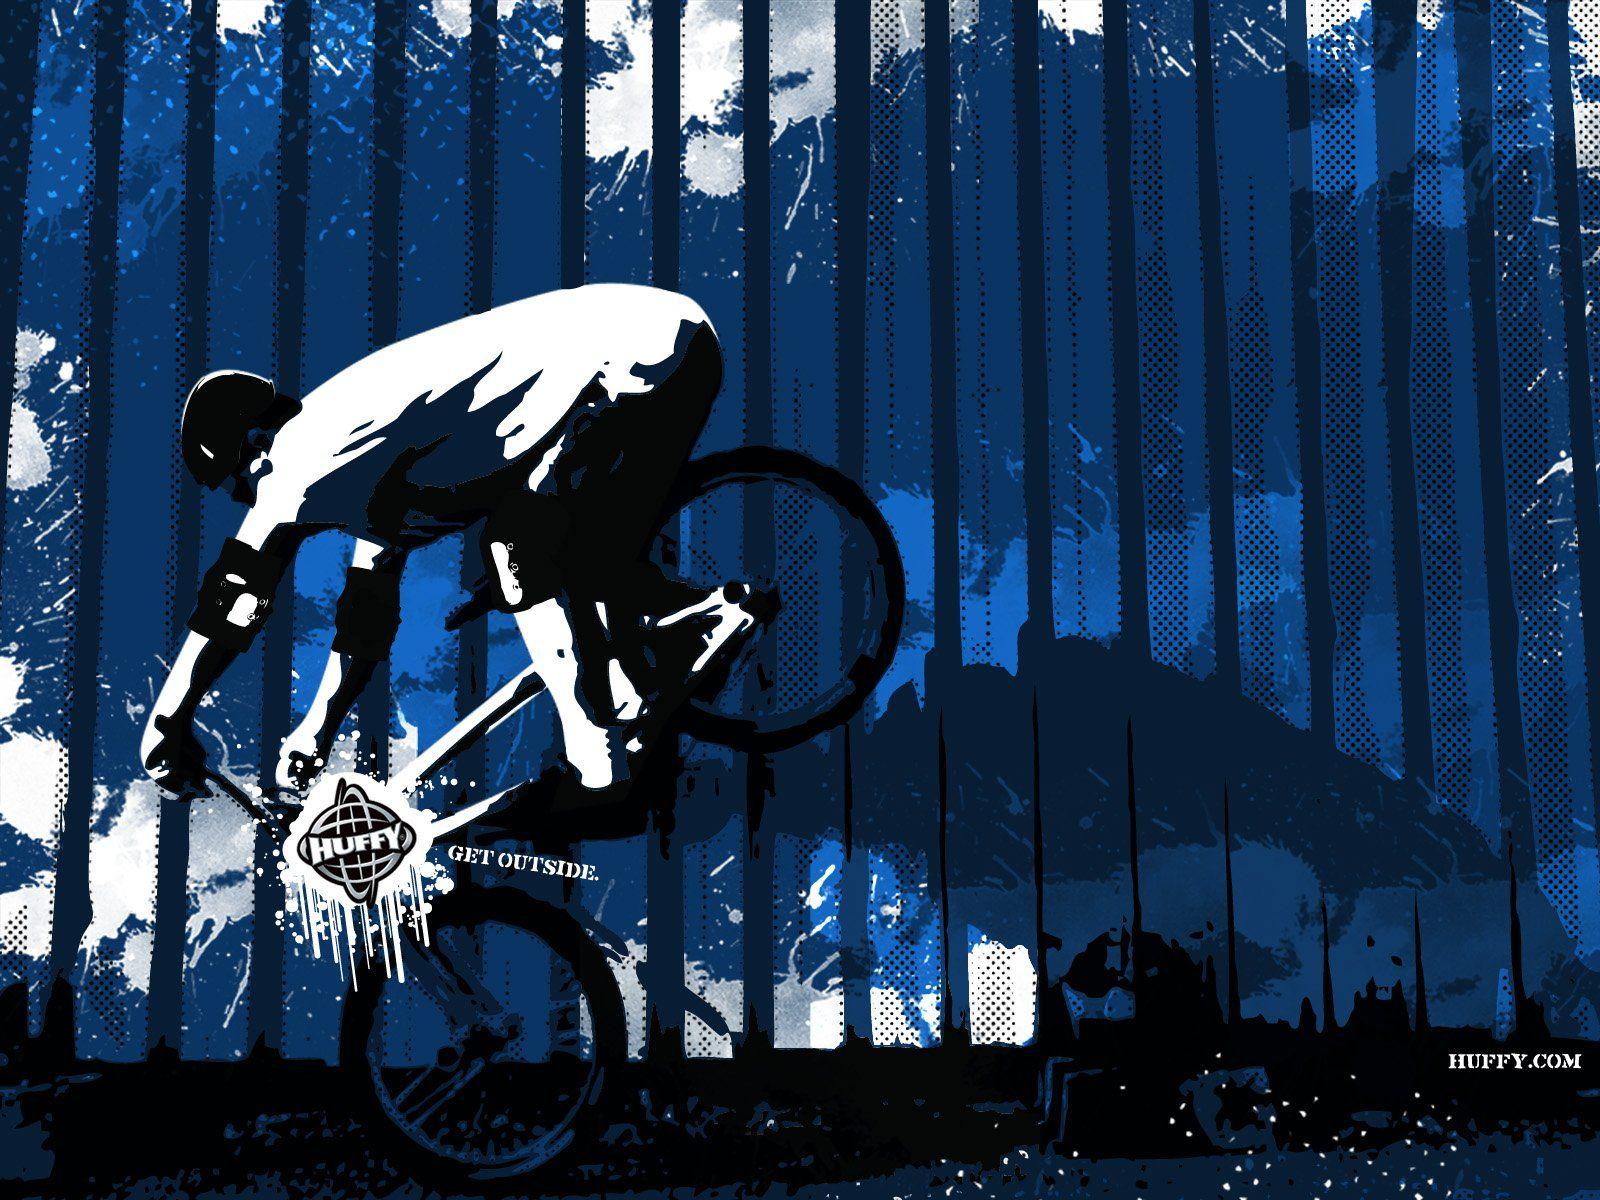 Awesome BMX Logo - BMX logo bike bicycle wallpaperx1200